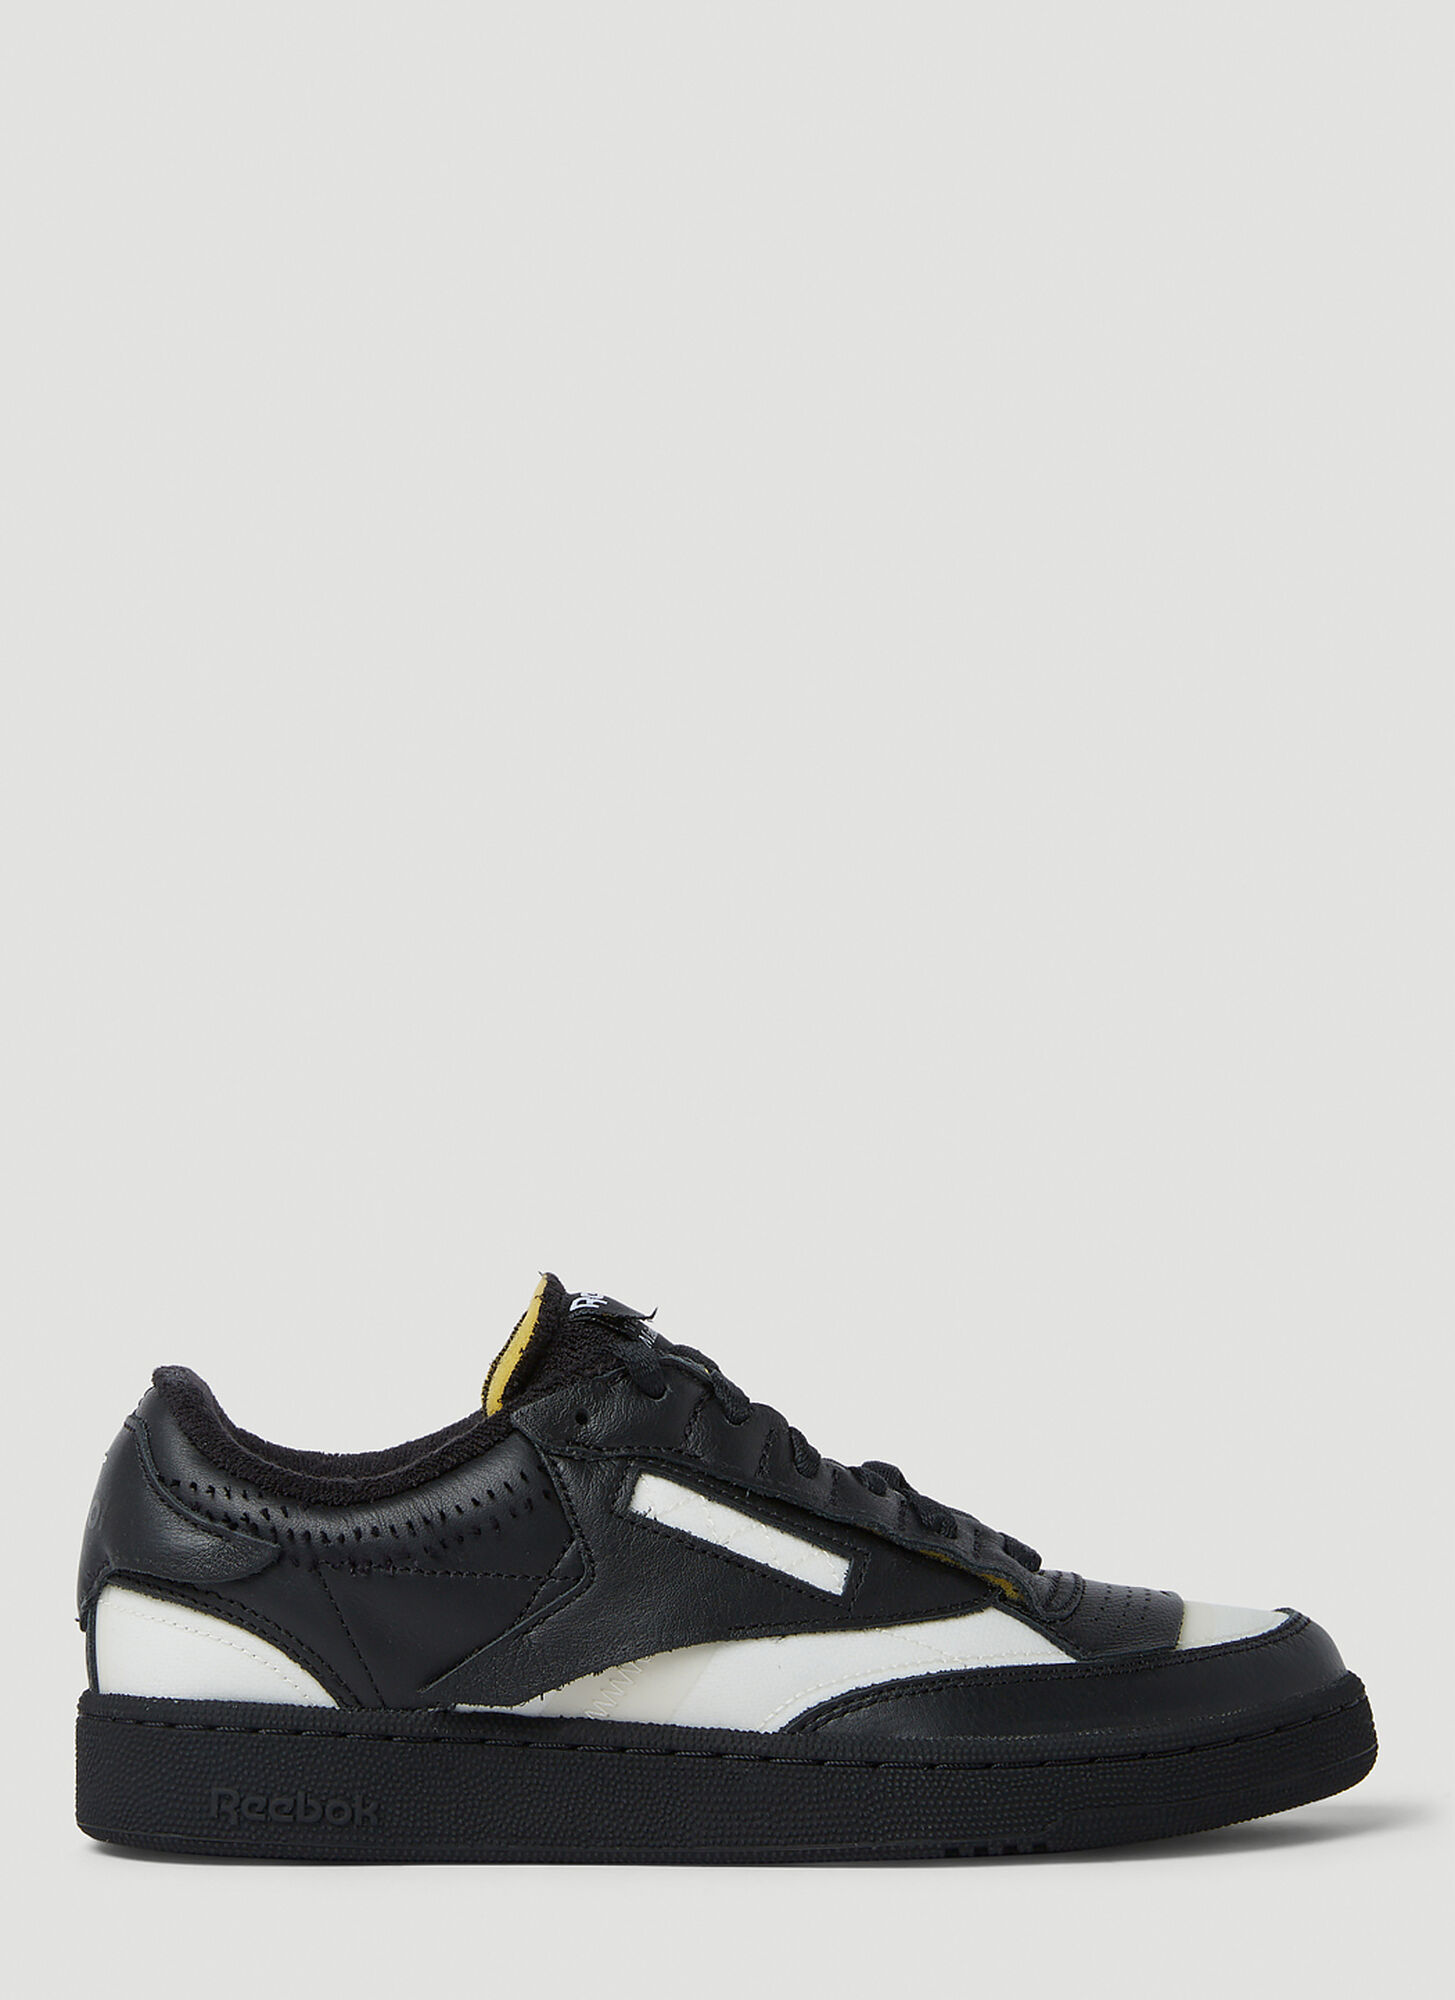 Maison Margiela X Reebok Project 0 Cc Memory Of V2 Sneakers In Black